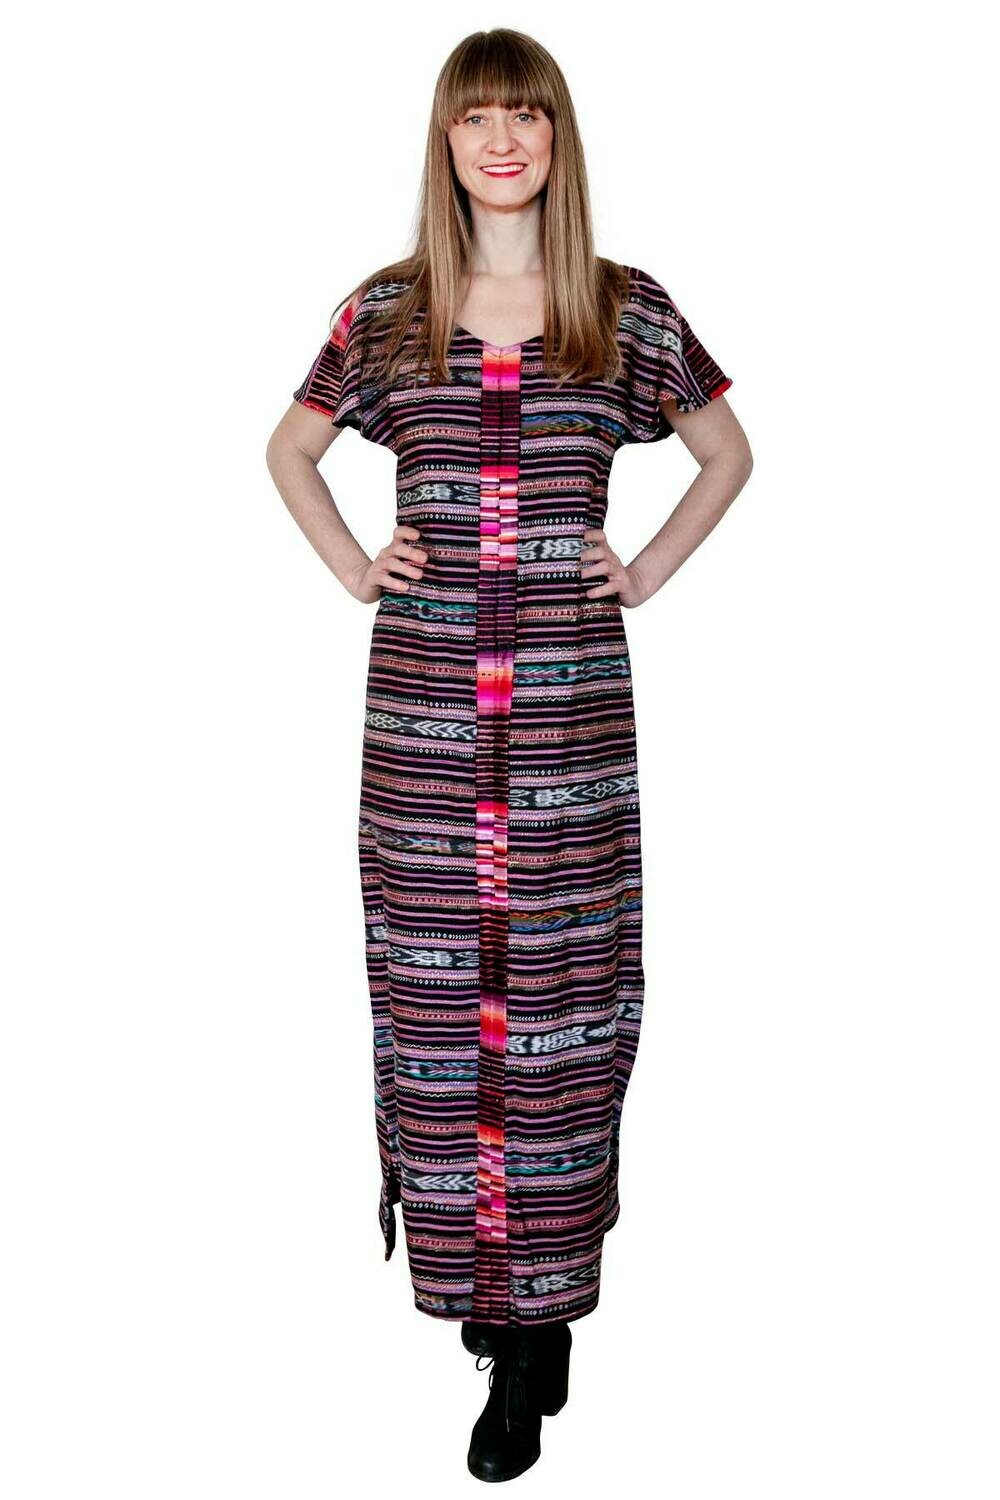 YAKAYA Designer Kleid "Anandi" Ethnic Dress Ikat Boho